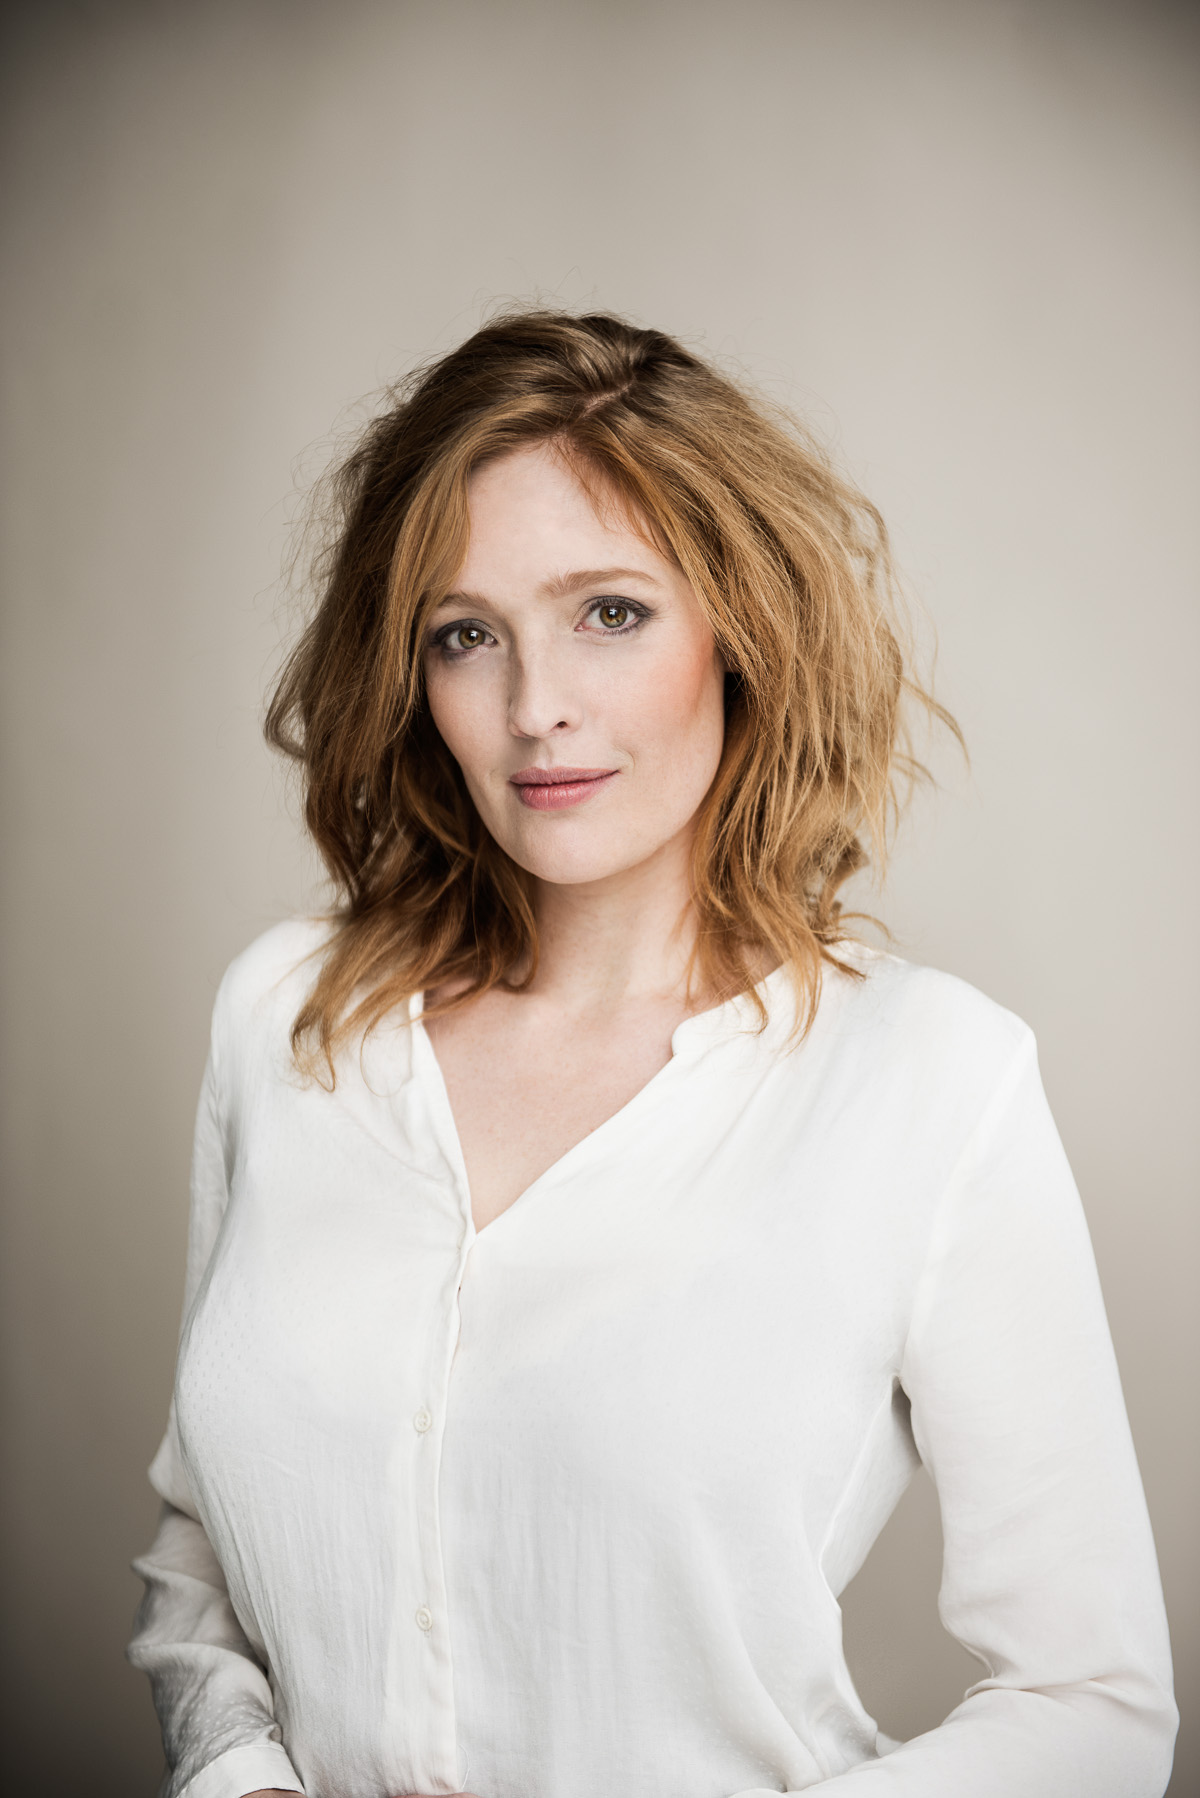 Julie Agnete Vang / Actor